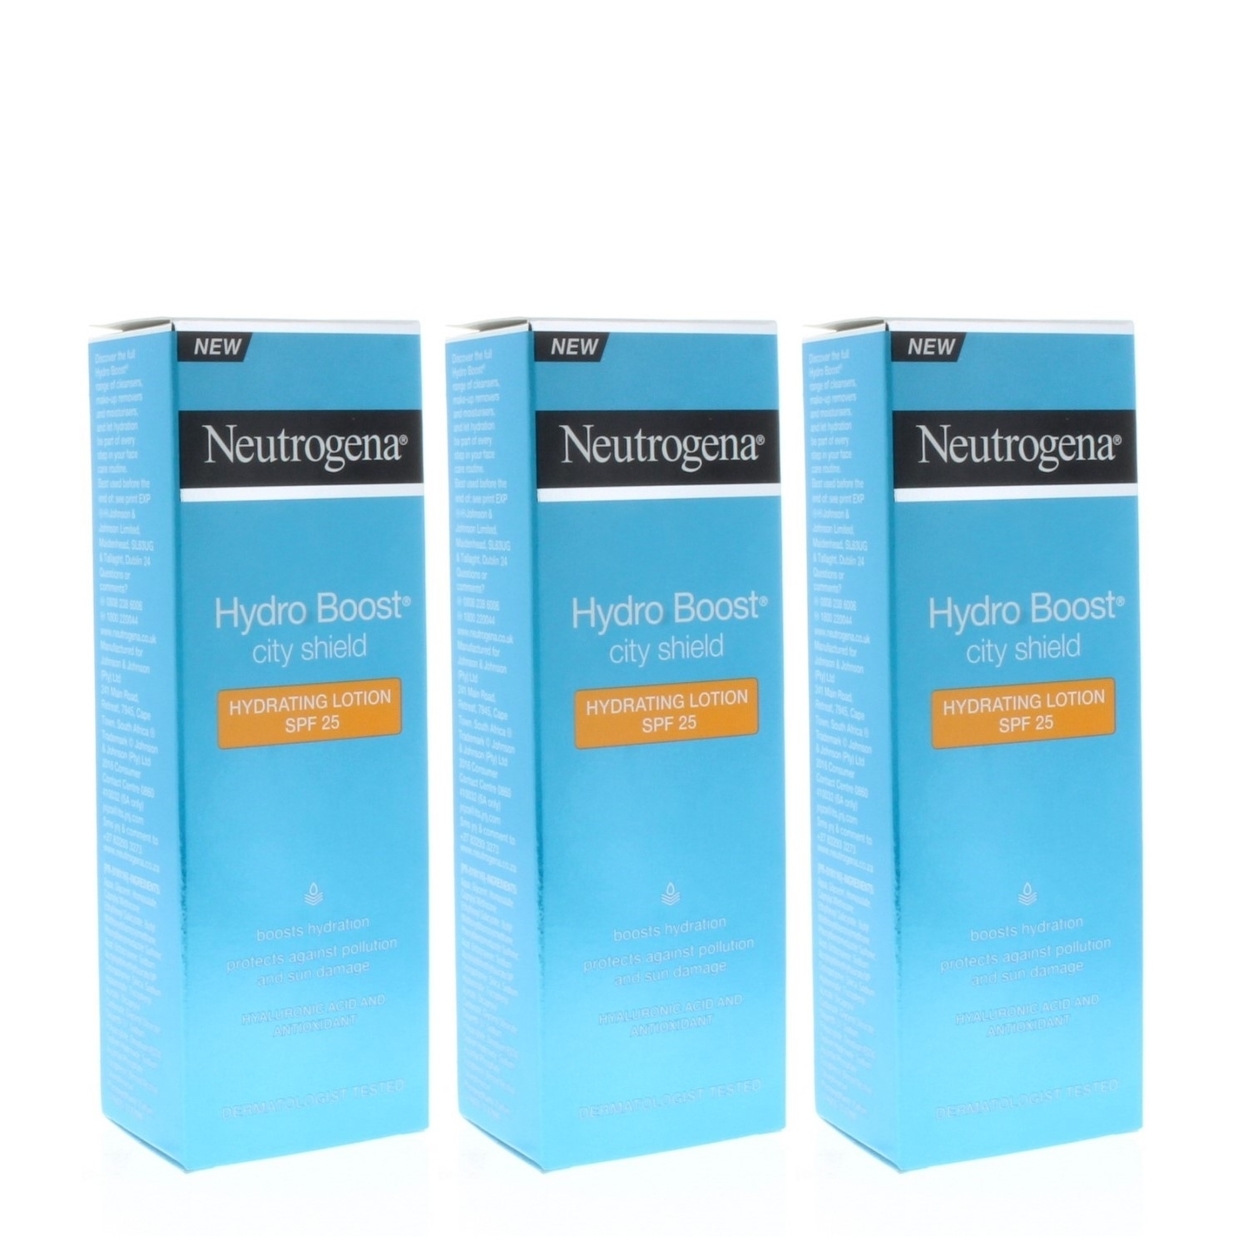 Neutrogena Hydro Boost City Shied Hydrating Lotion SPF 25 50ml (3 Pack)